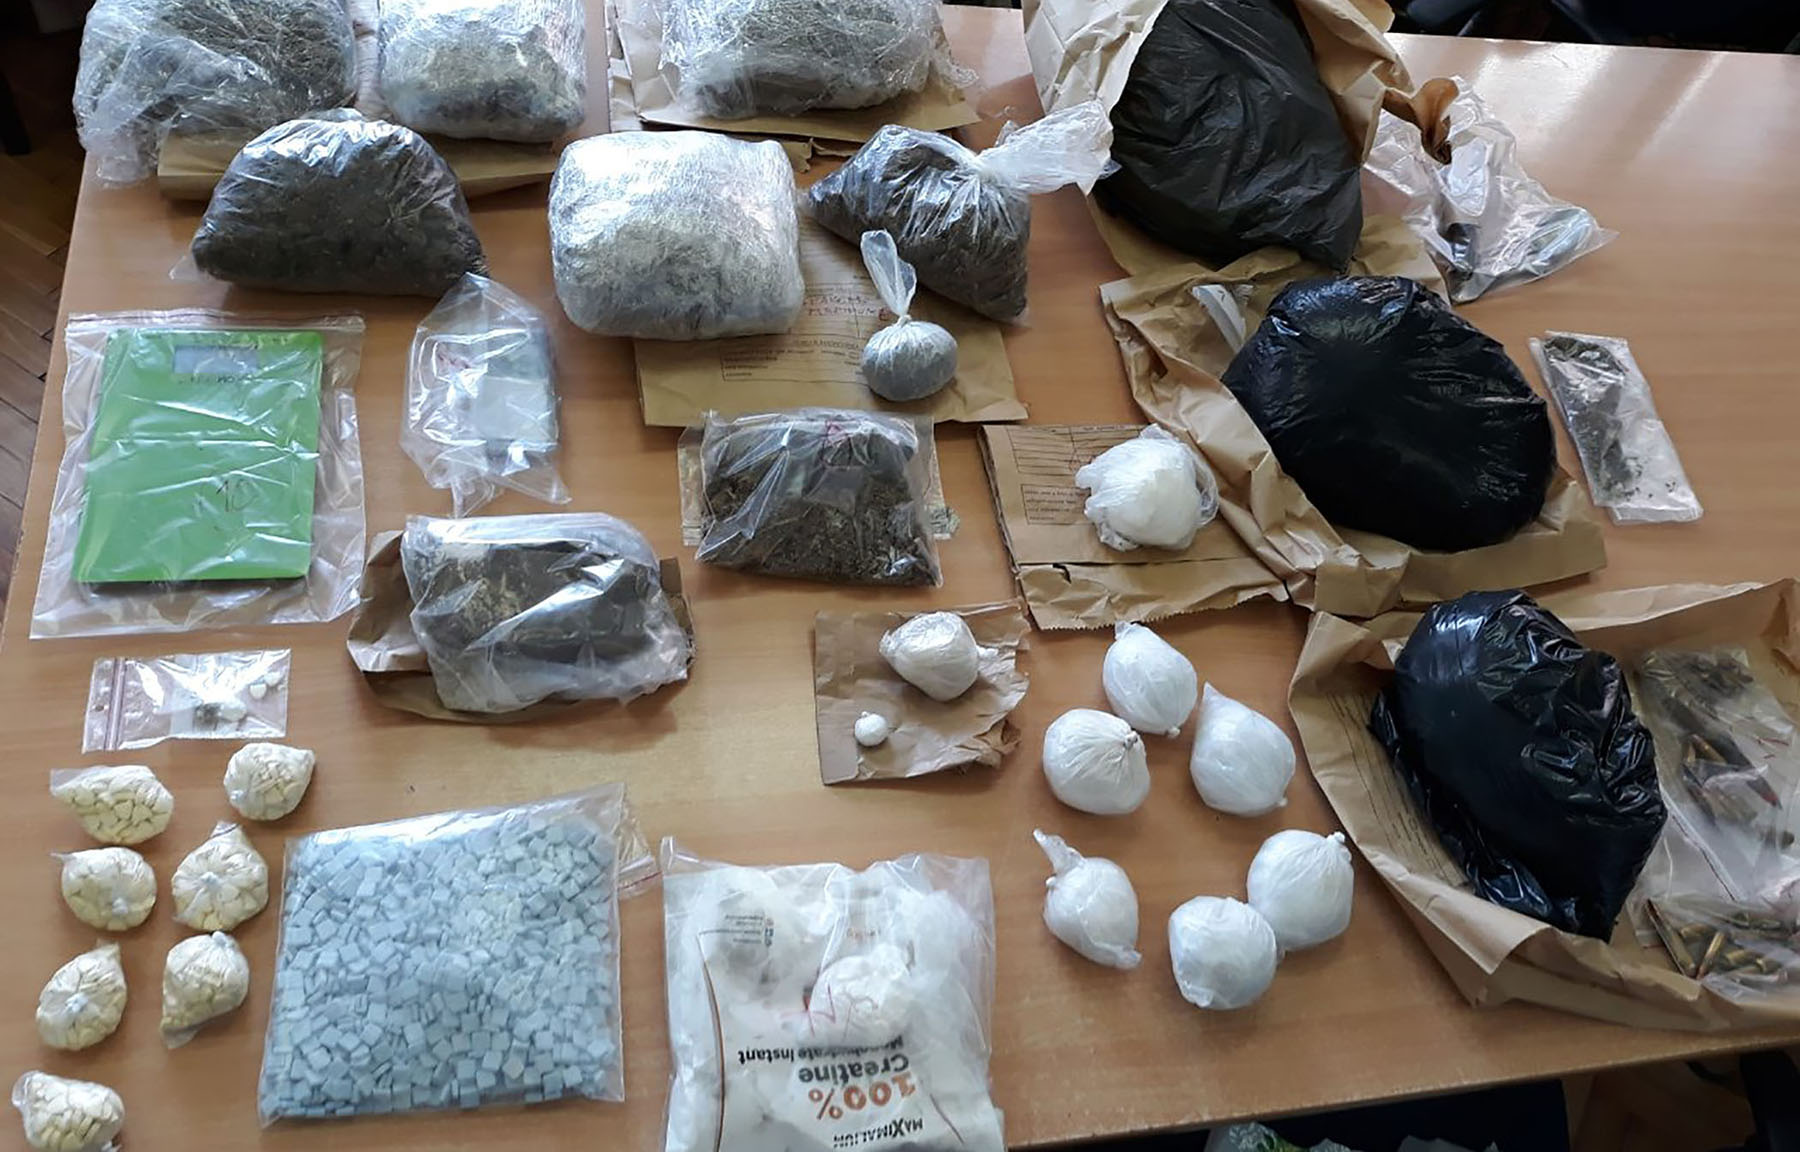 Zaplenjeno oko šest kilograma različitih vrsta narkotika i uhapšeno 12 osoba